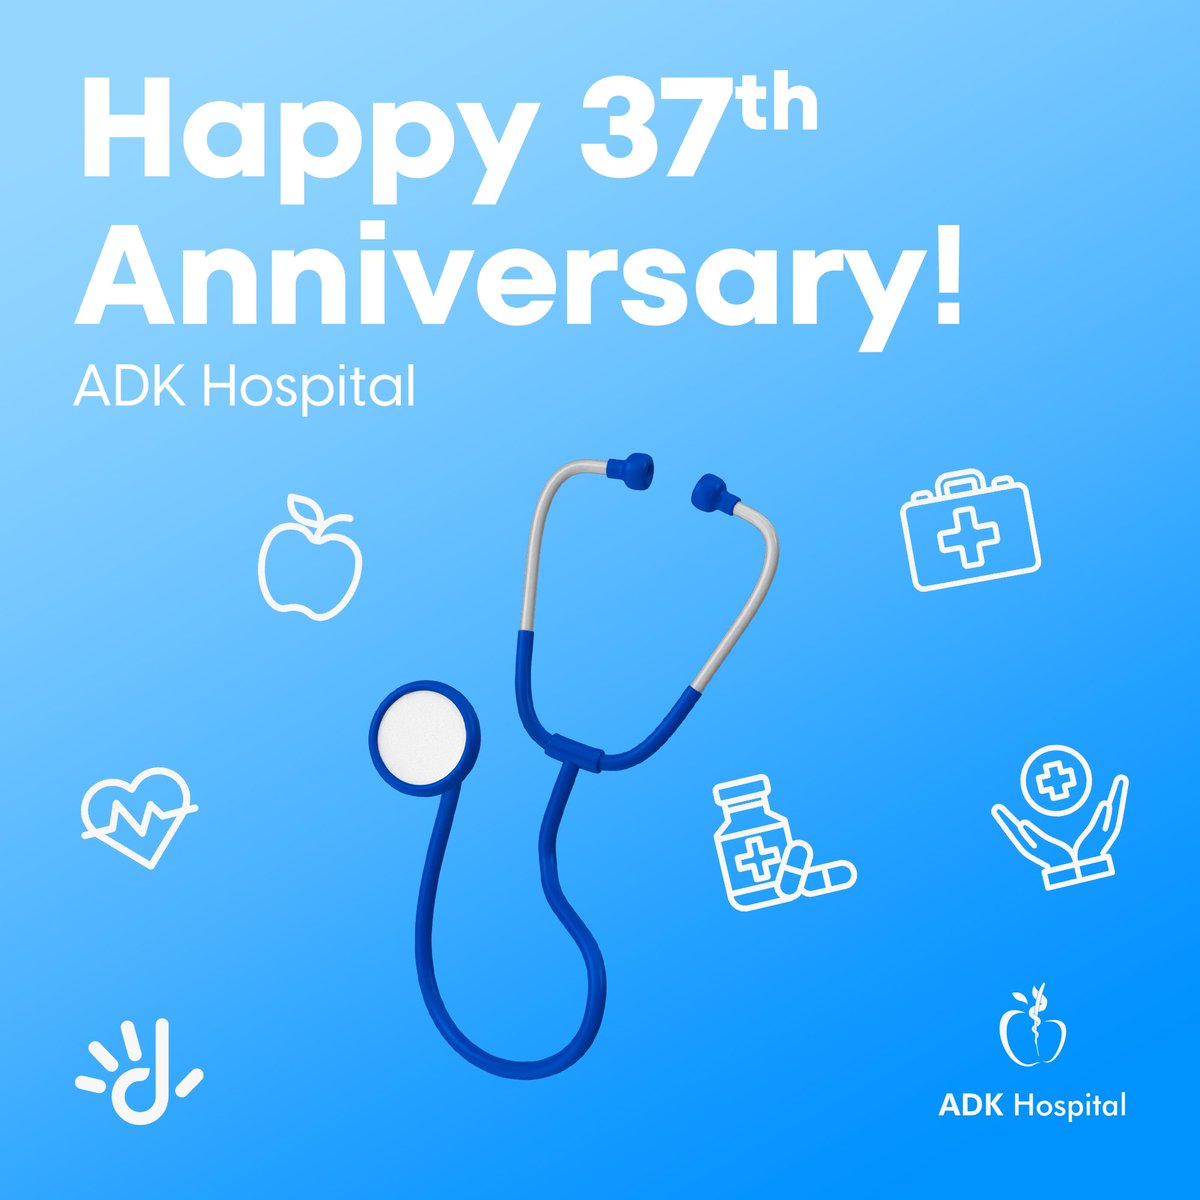 Wishing a very happy anniversary to Team @ADKHospital 🥳🧡